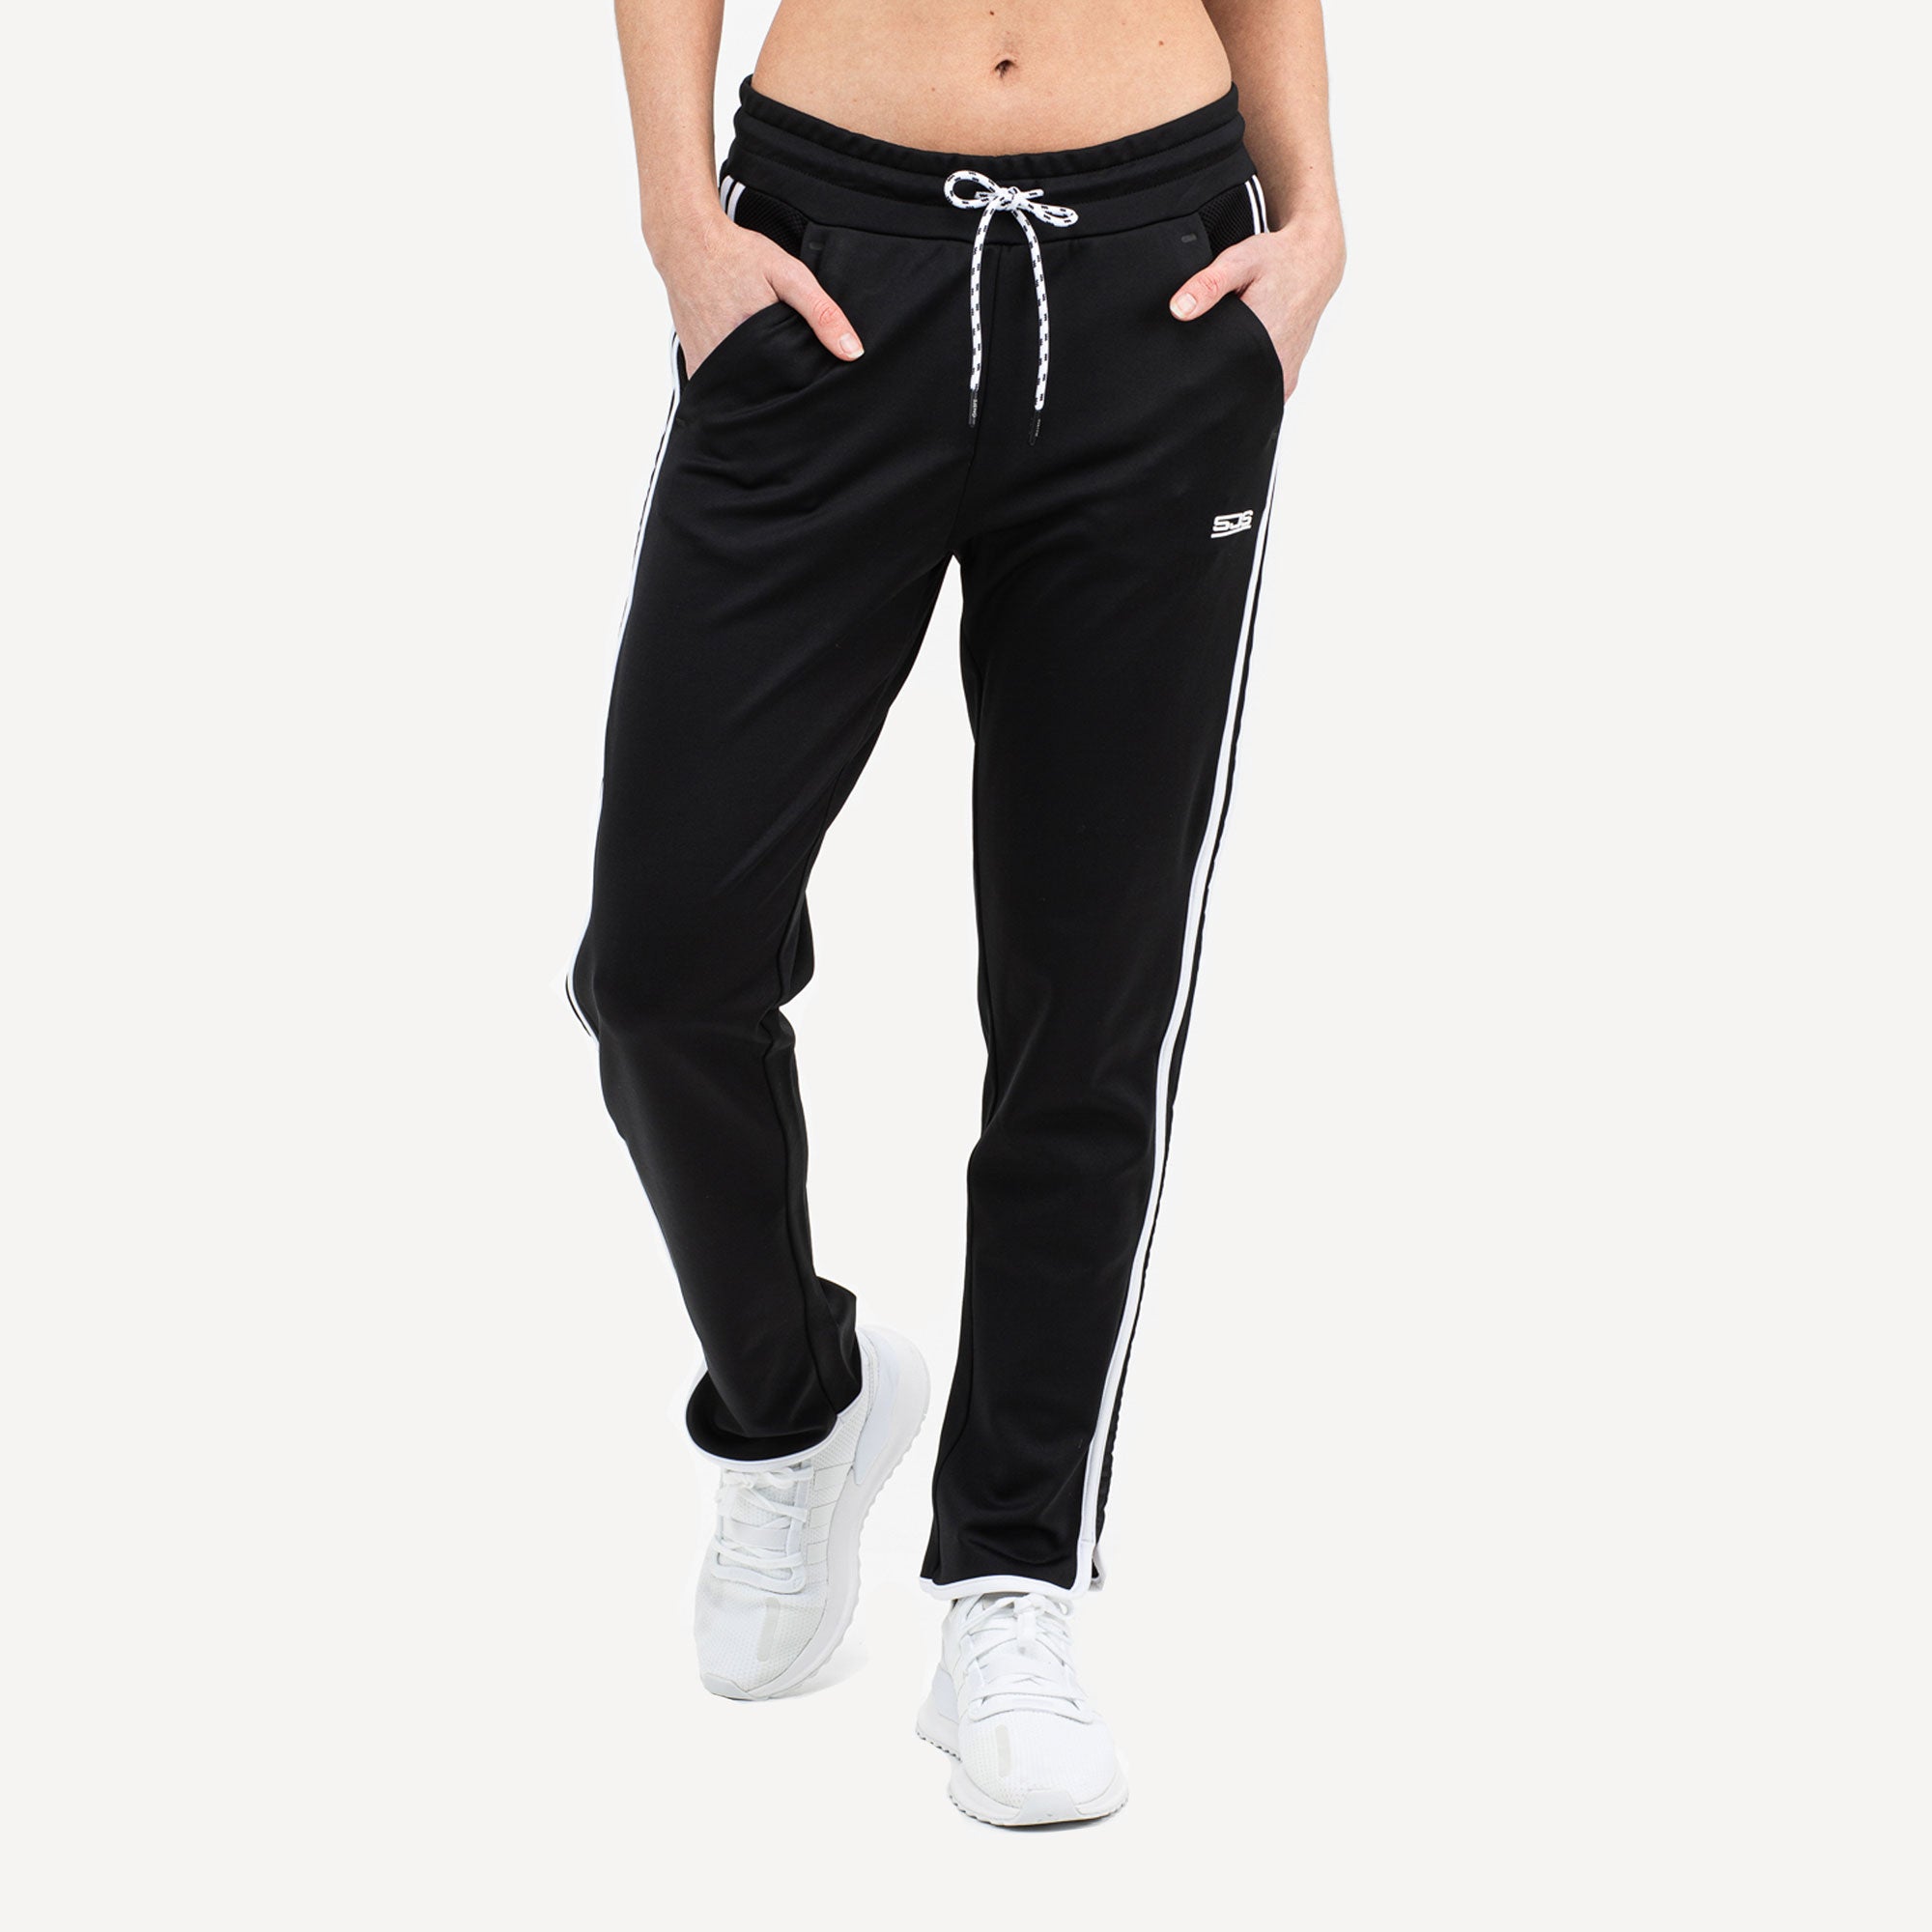 Adidas Melbourne Woven Pant (Ladies) - Black –